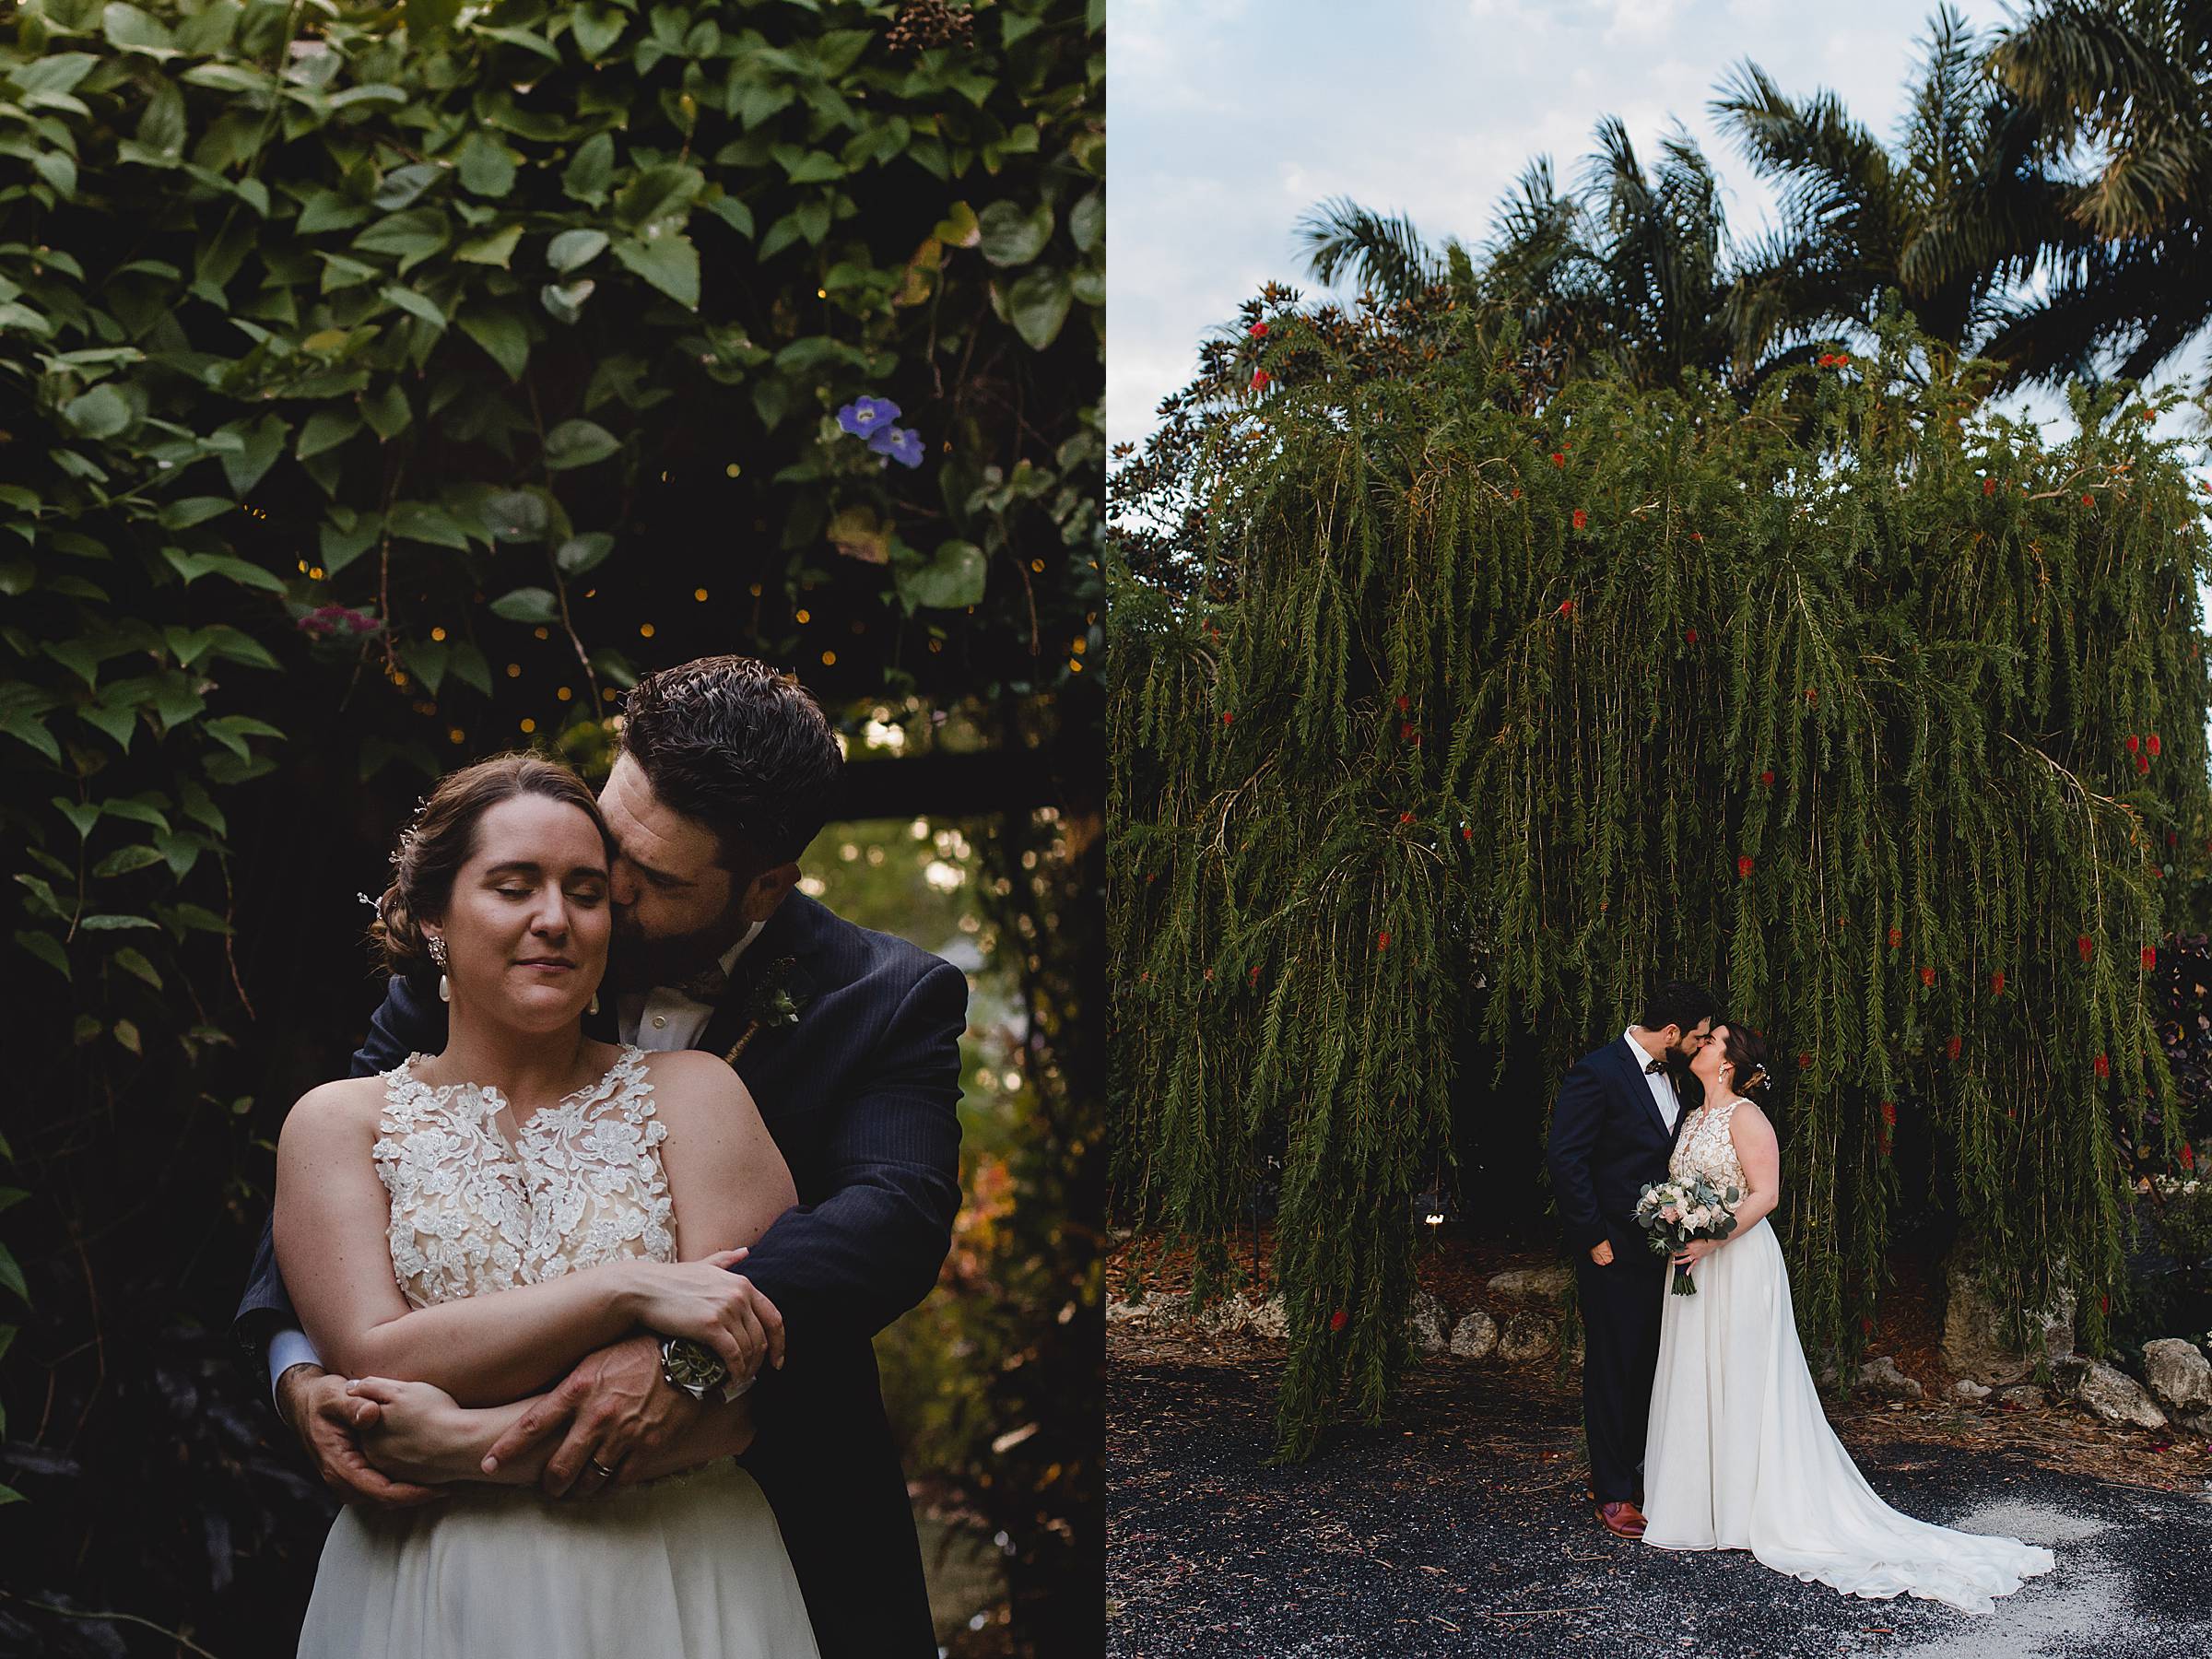 bride and groom at wedding, mixon fruit farms wedding, juliana montane photography, wedding photographer in sarasota, fl